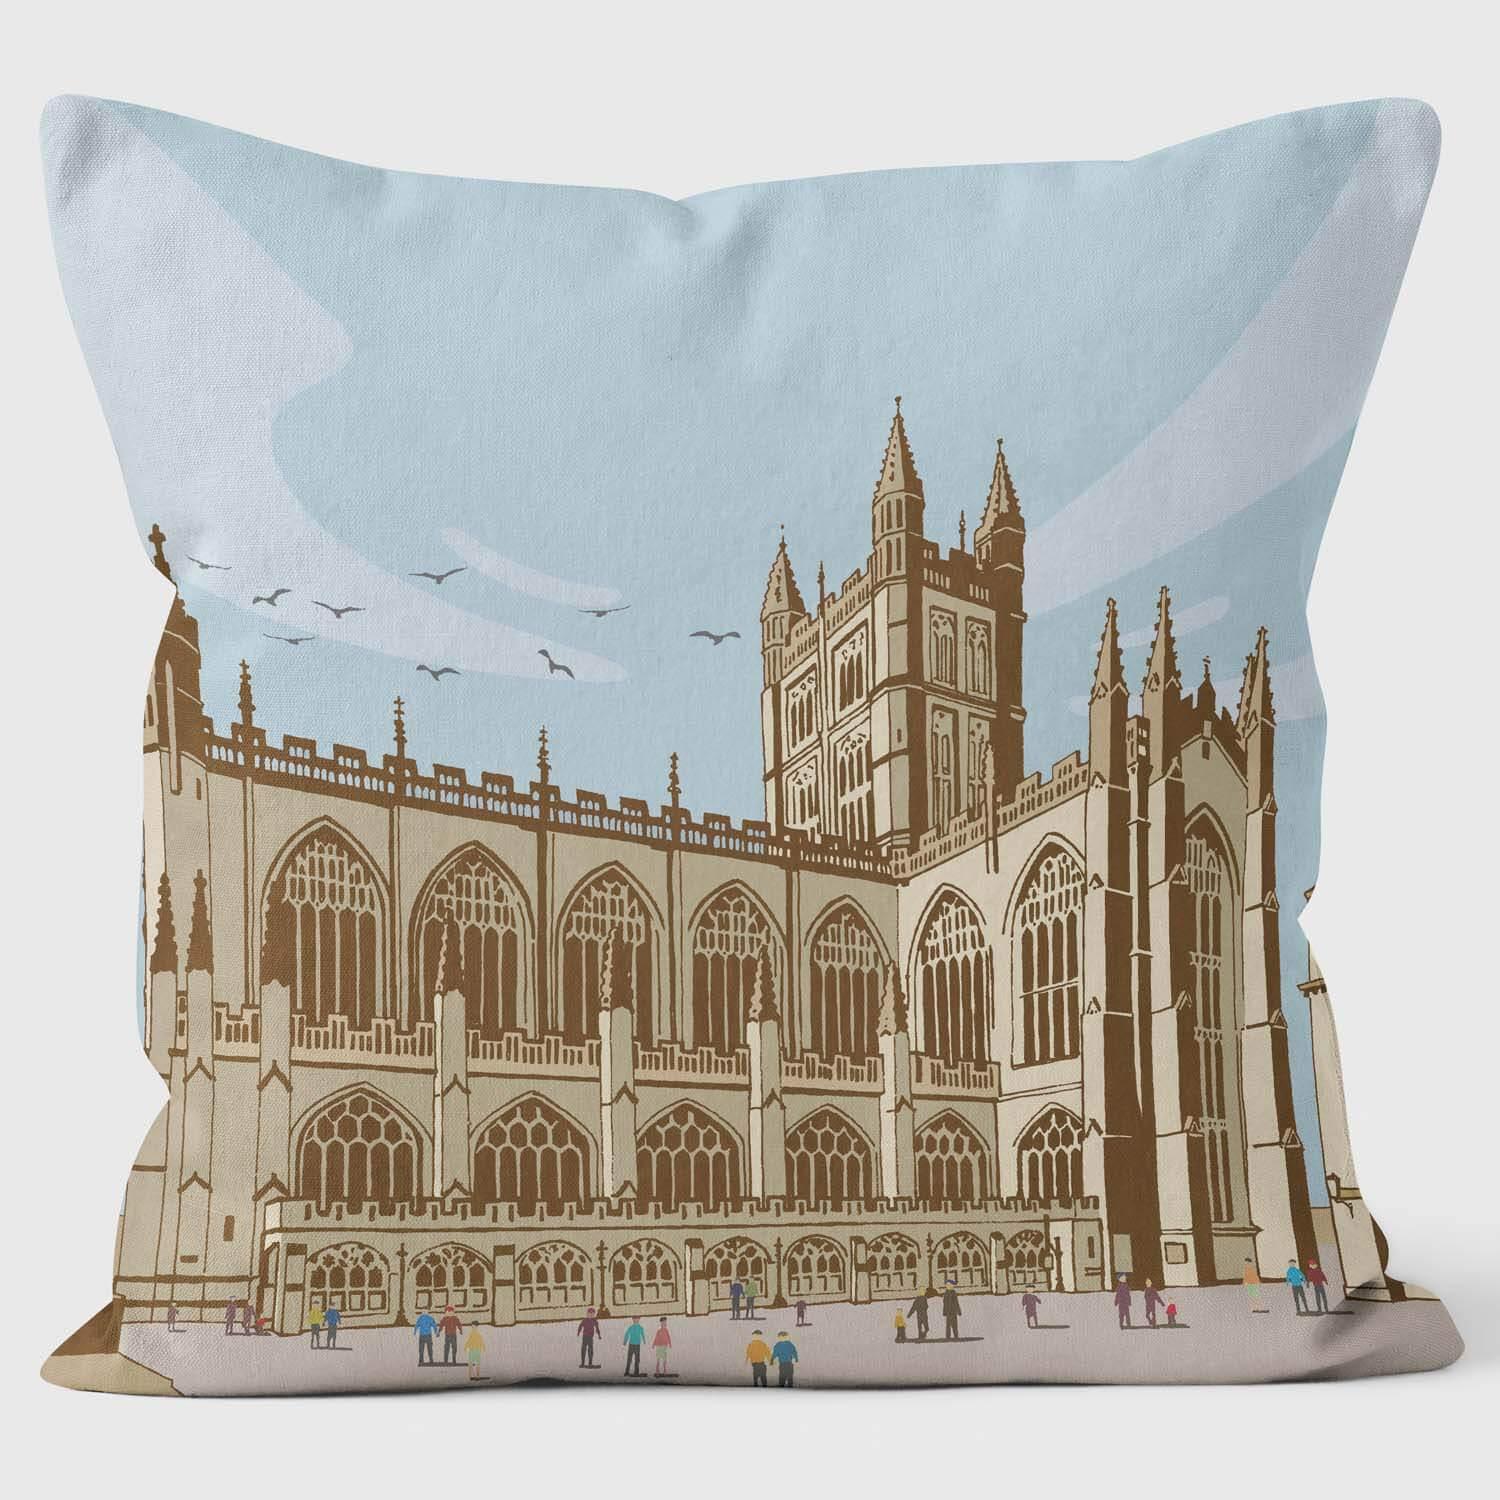 Bath Abbey - Martin Wiscombe Cushion - Handmade Cushions UK - WeLoveCushions